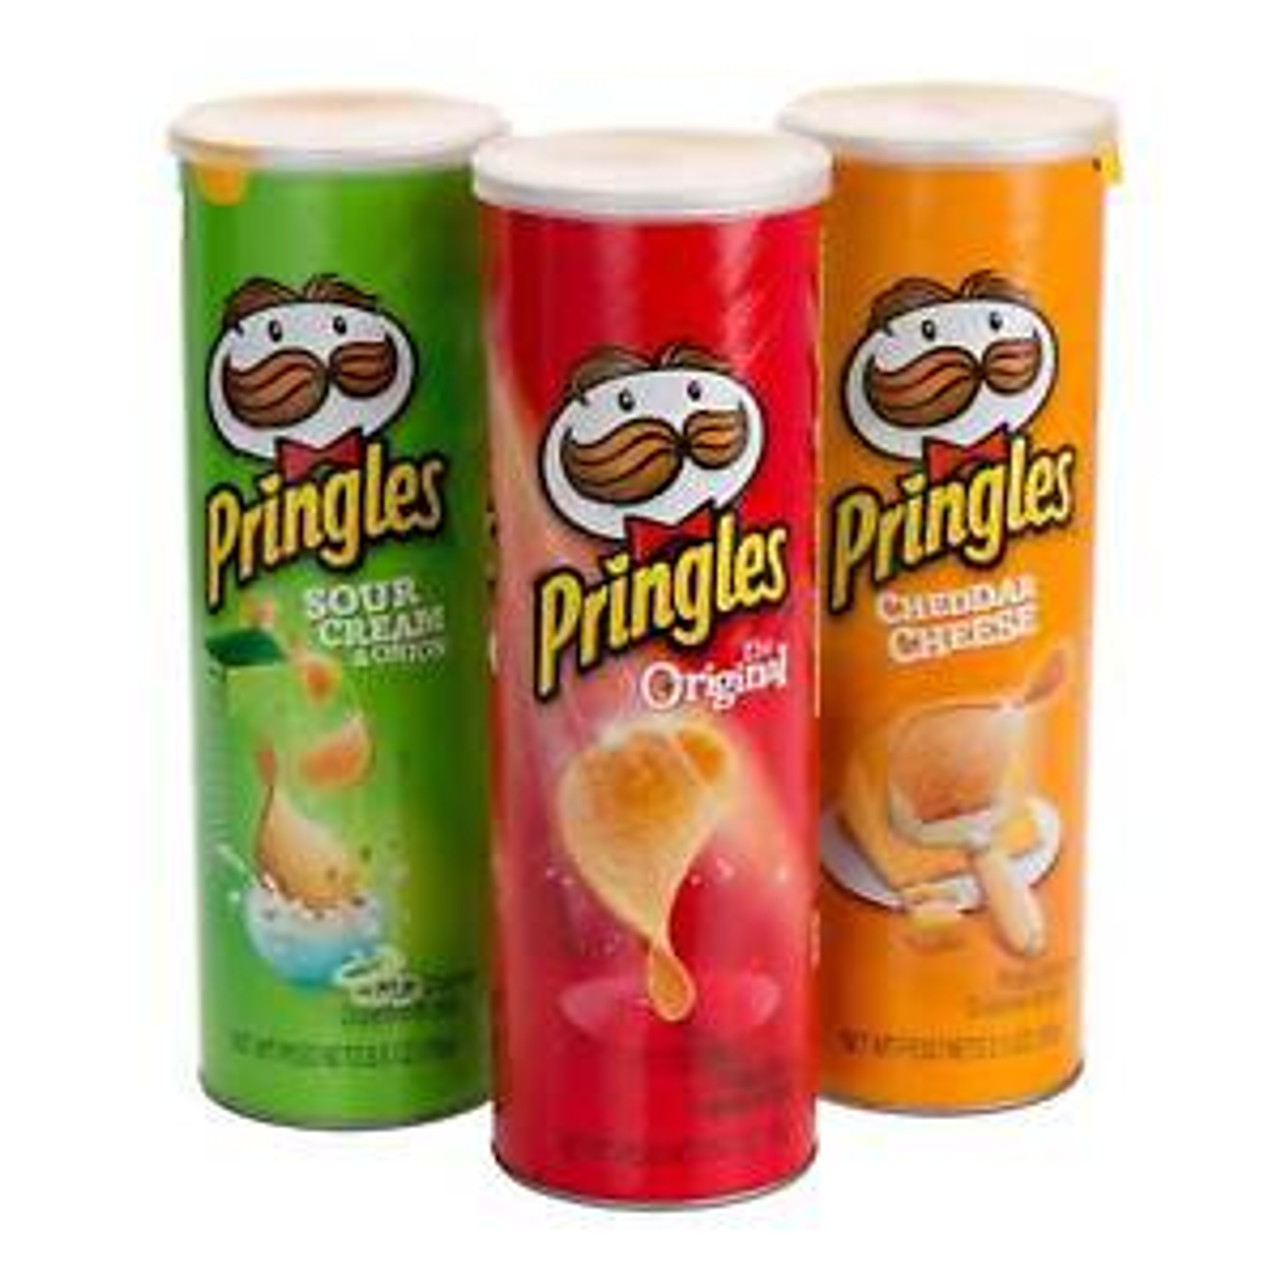 Принглс цена. Pringles Original 165. Чипсы чипсы Pringles. Чипсы принглс оригинал 165г. Чипсы Pringles 165g Original (оригинальные).